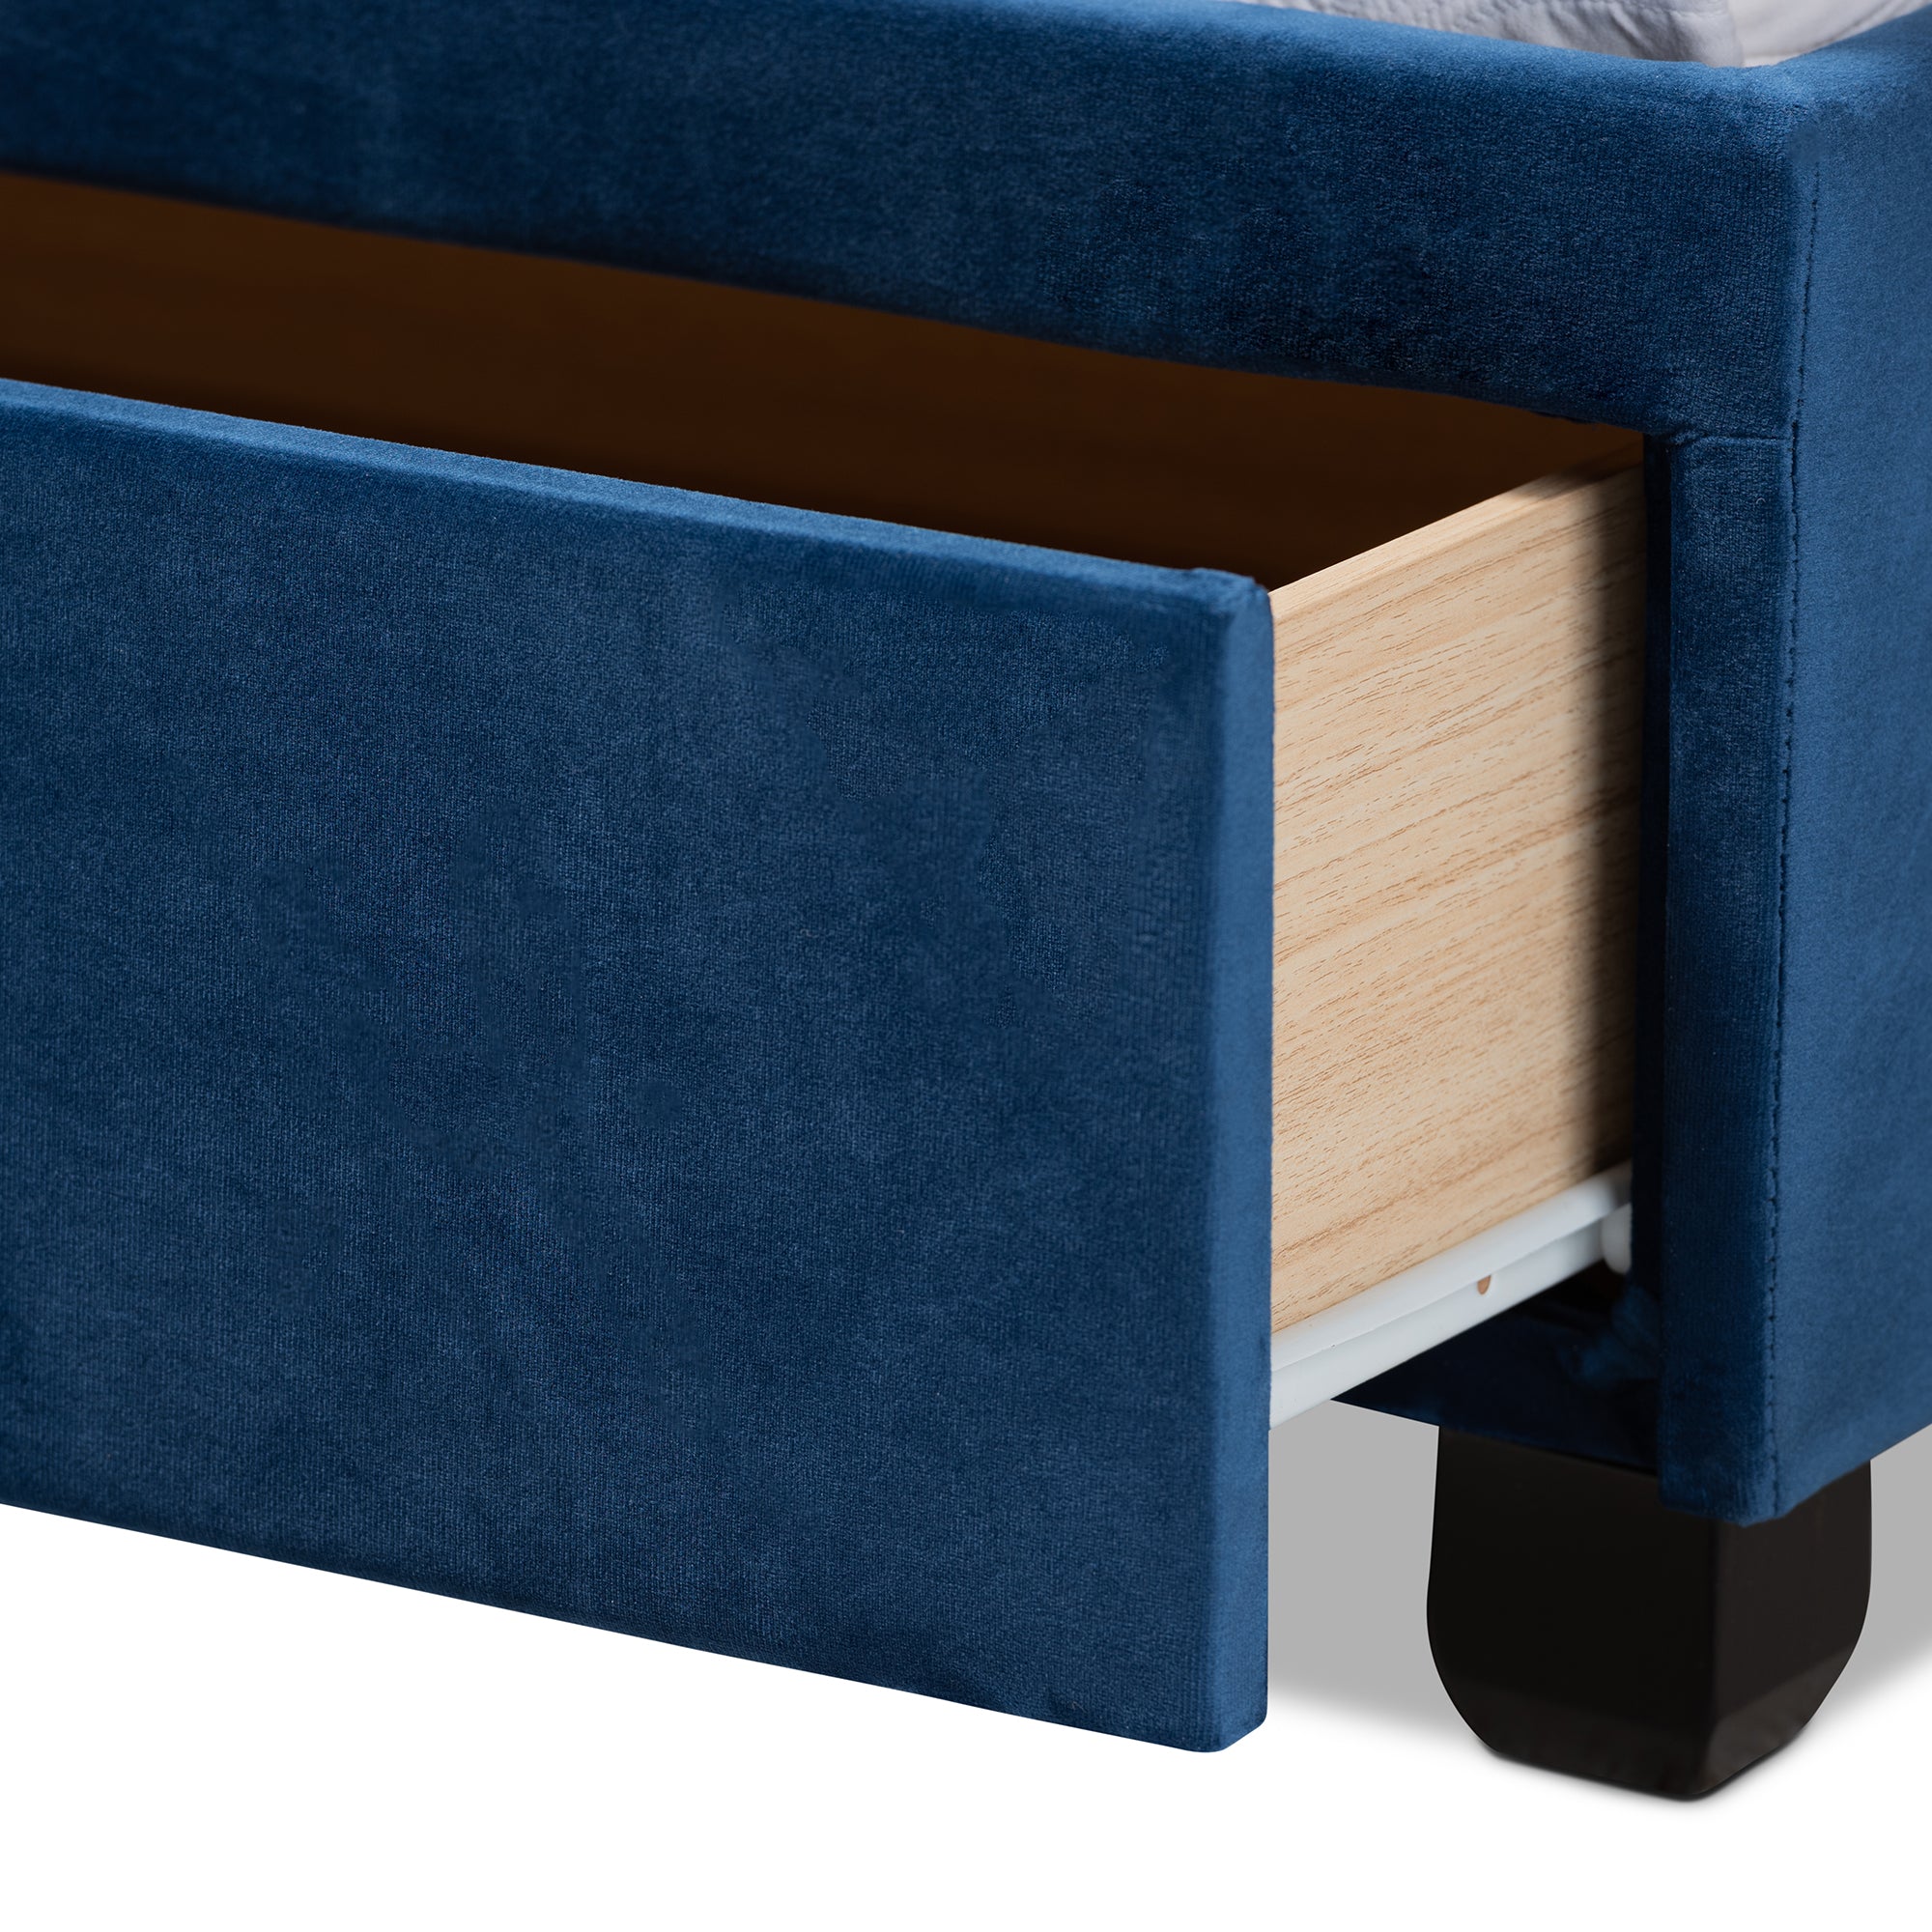 Caronia Modern Bed 2-Drawer-Bed-Baxton Studio - WI-Wall2Wall Furnishings